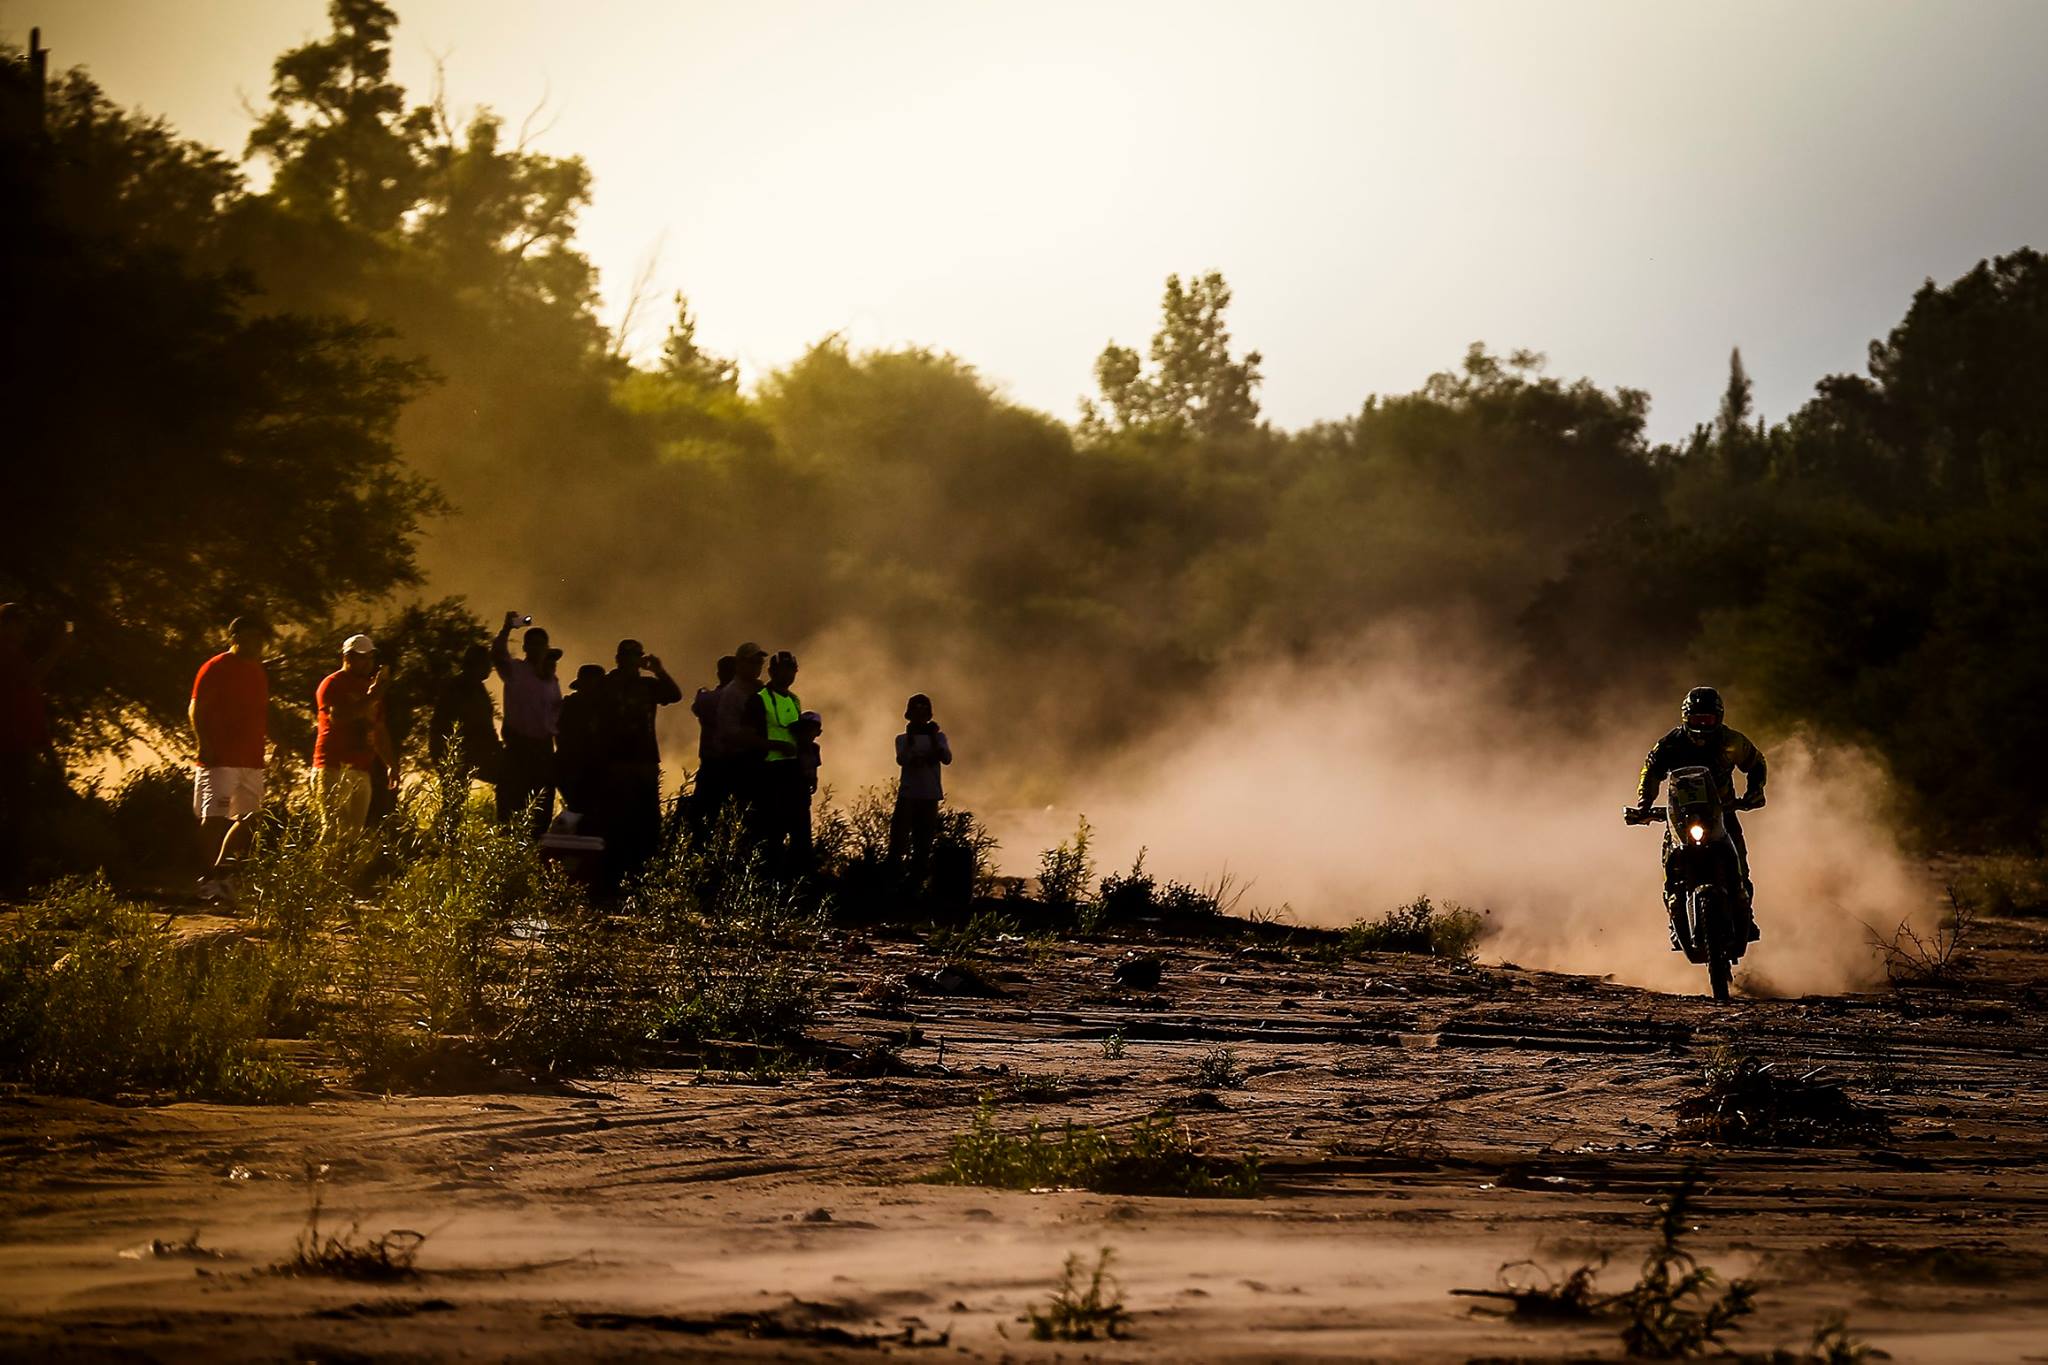 motor bike - Dakar 2016 - photo by A Lavadinho - A Vialatte